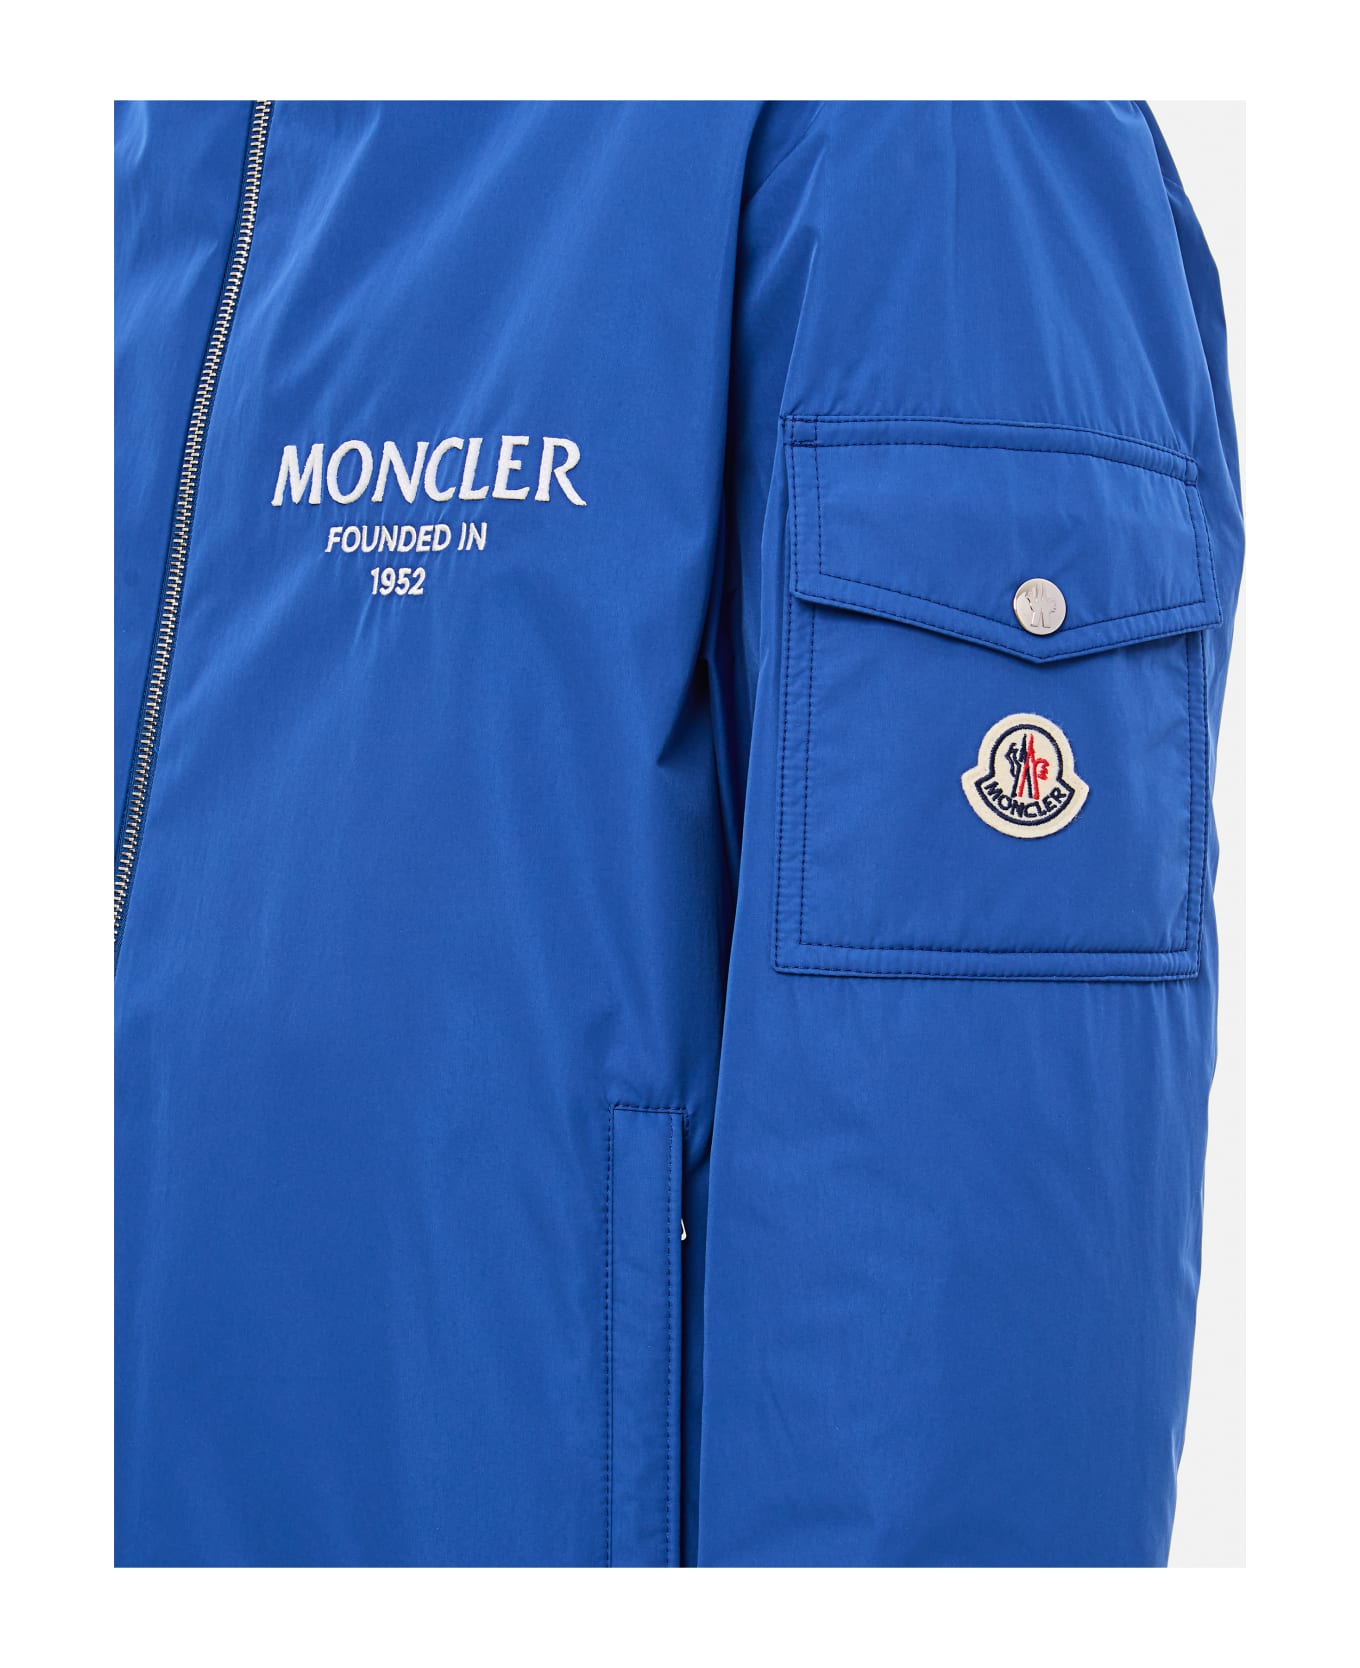 Moncler Granero Jacket - Clear Blue